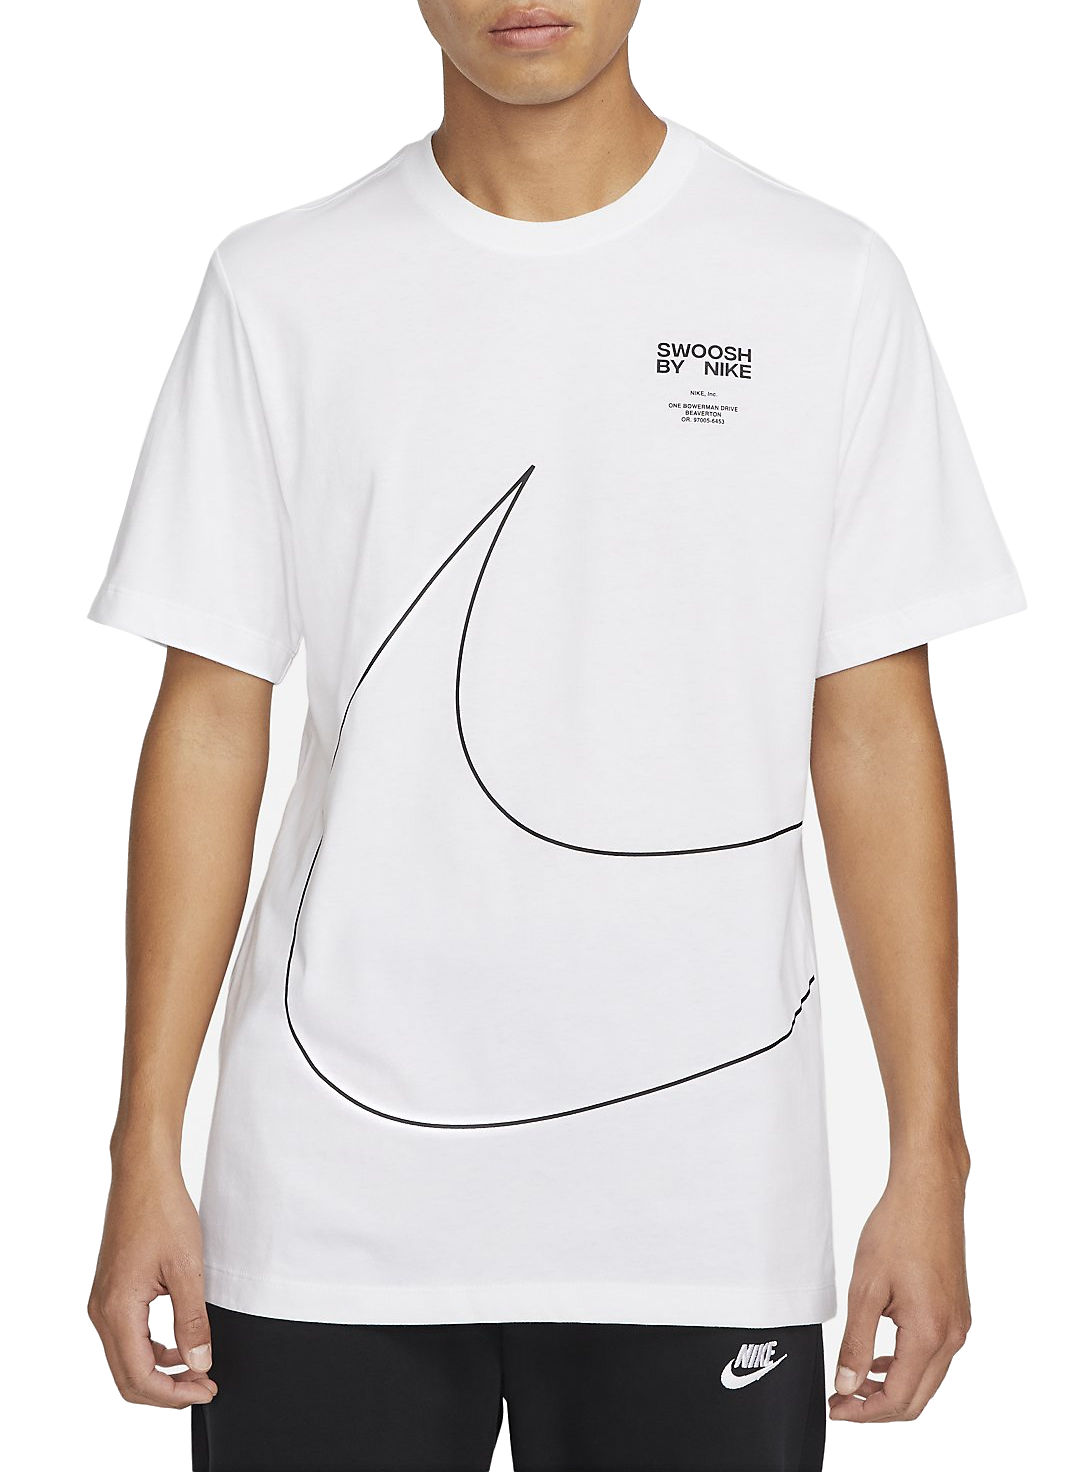 Verplicht oorlog Incarijk Nike Sportswear Swoosh T-Shirt - Top4Running.be